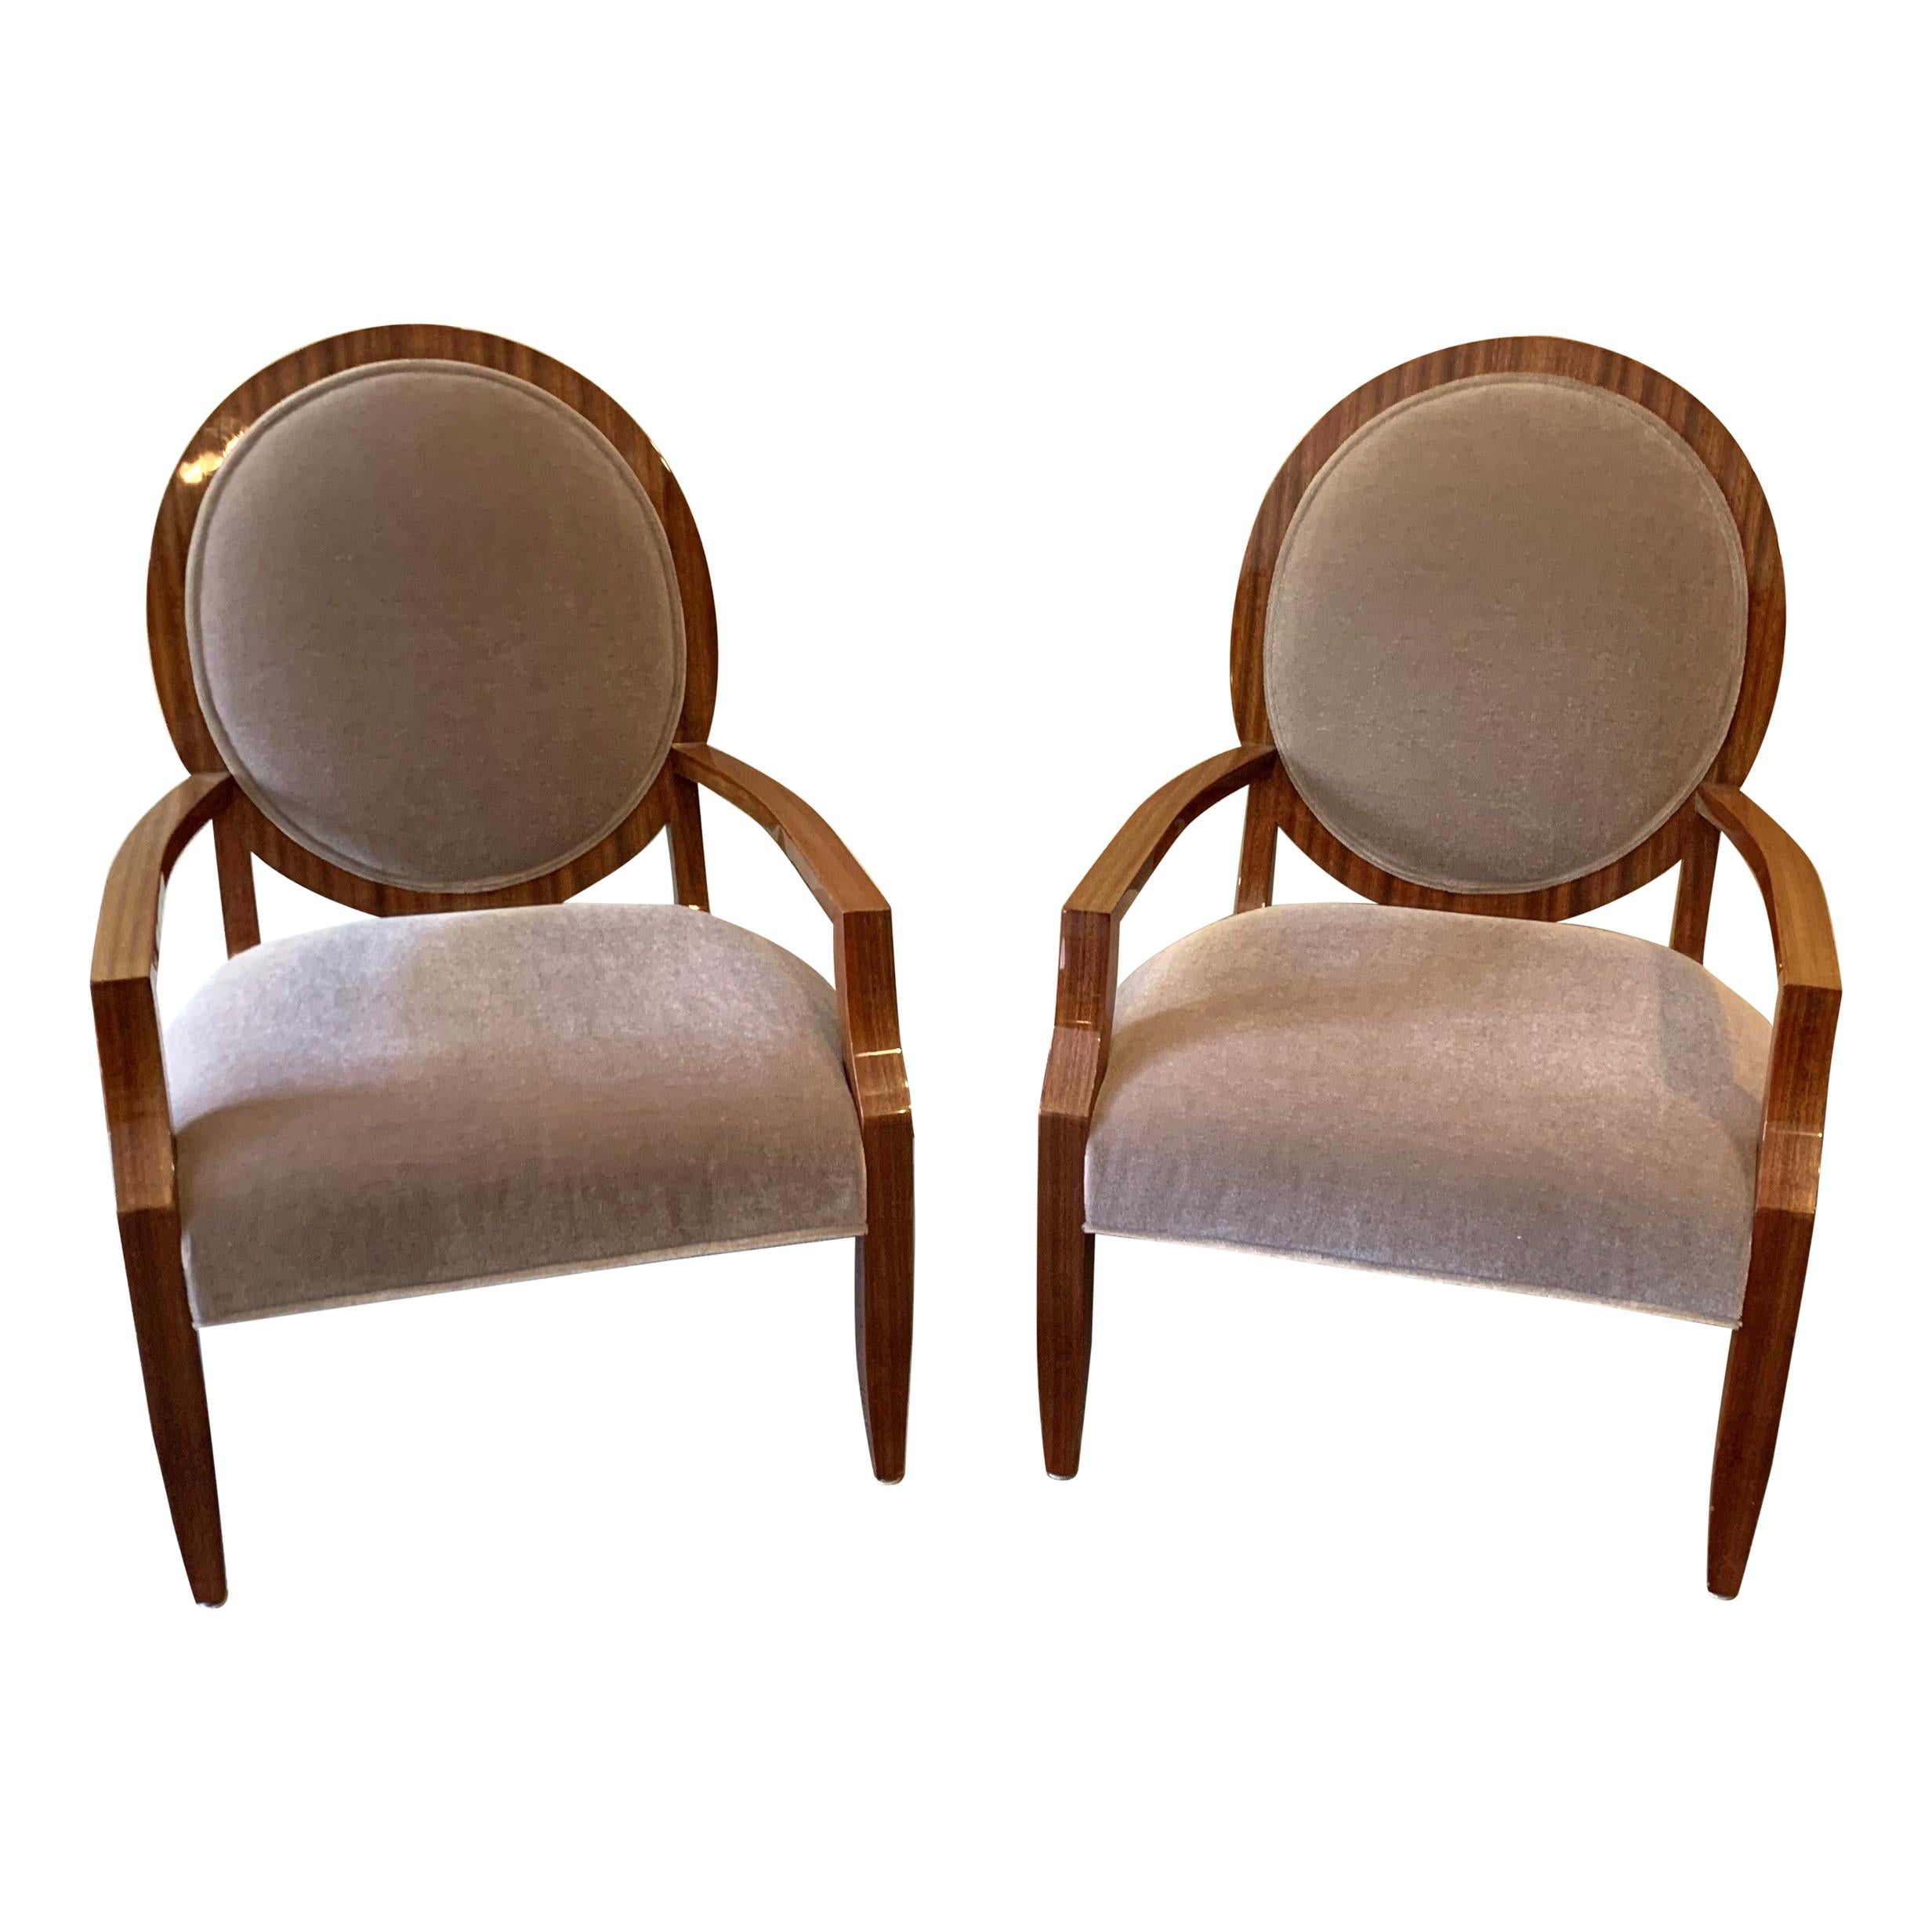 Wonderful Mid-Century Modern Pair of Macassar Wood Mohair Upholstery Armchairs